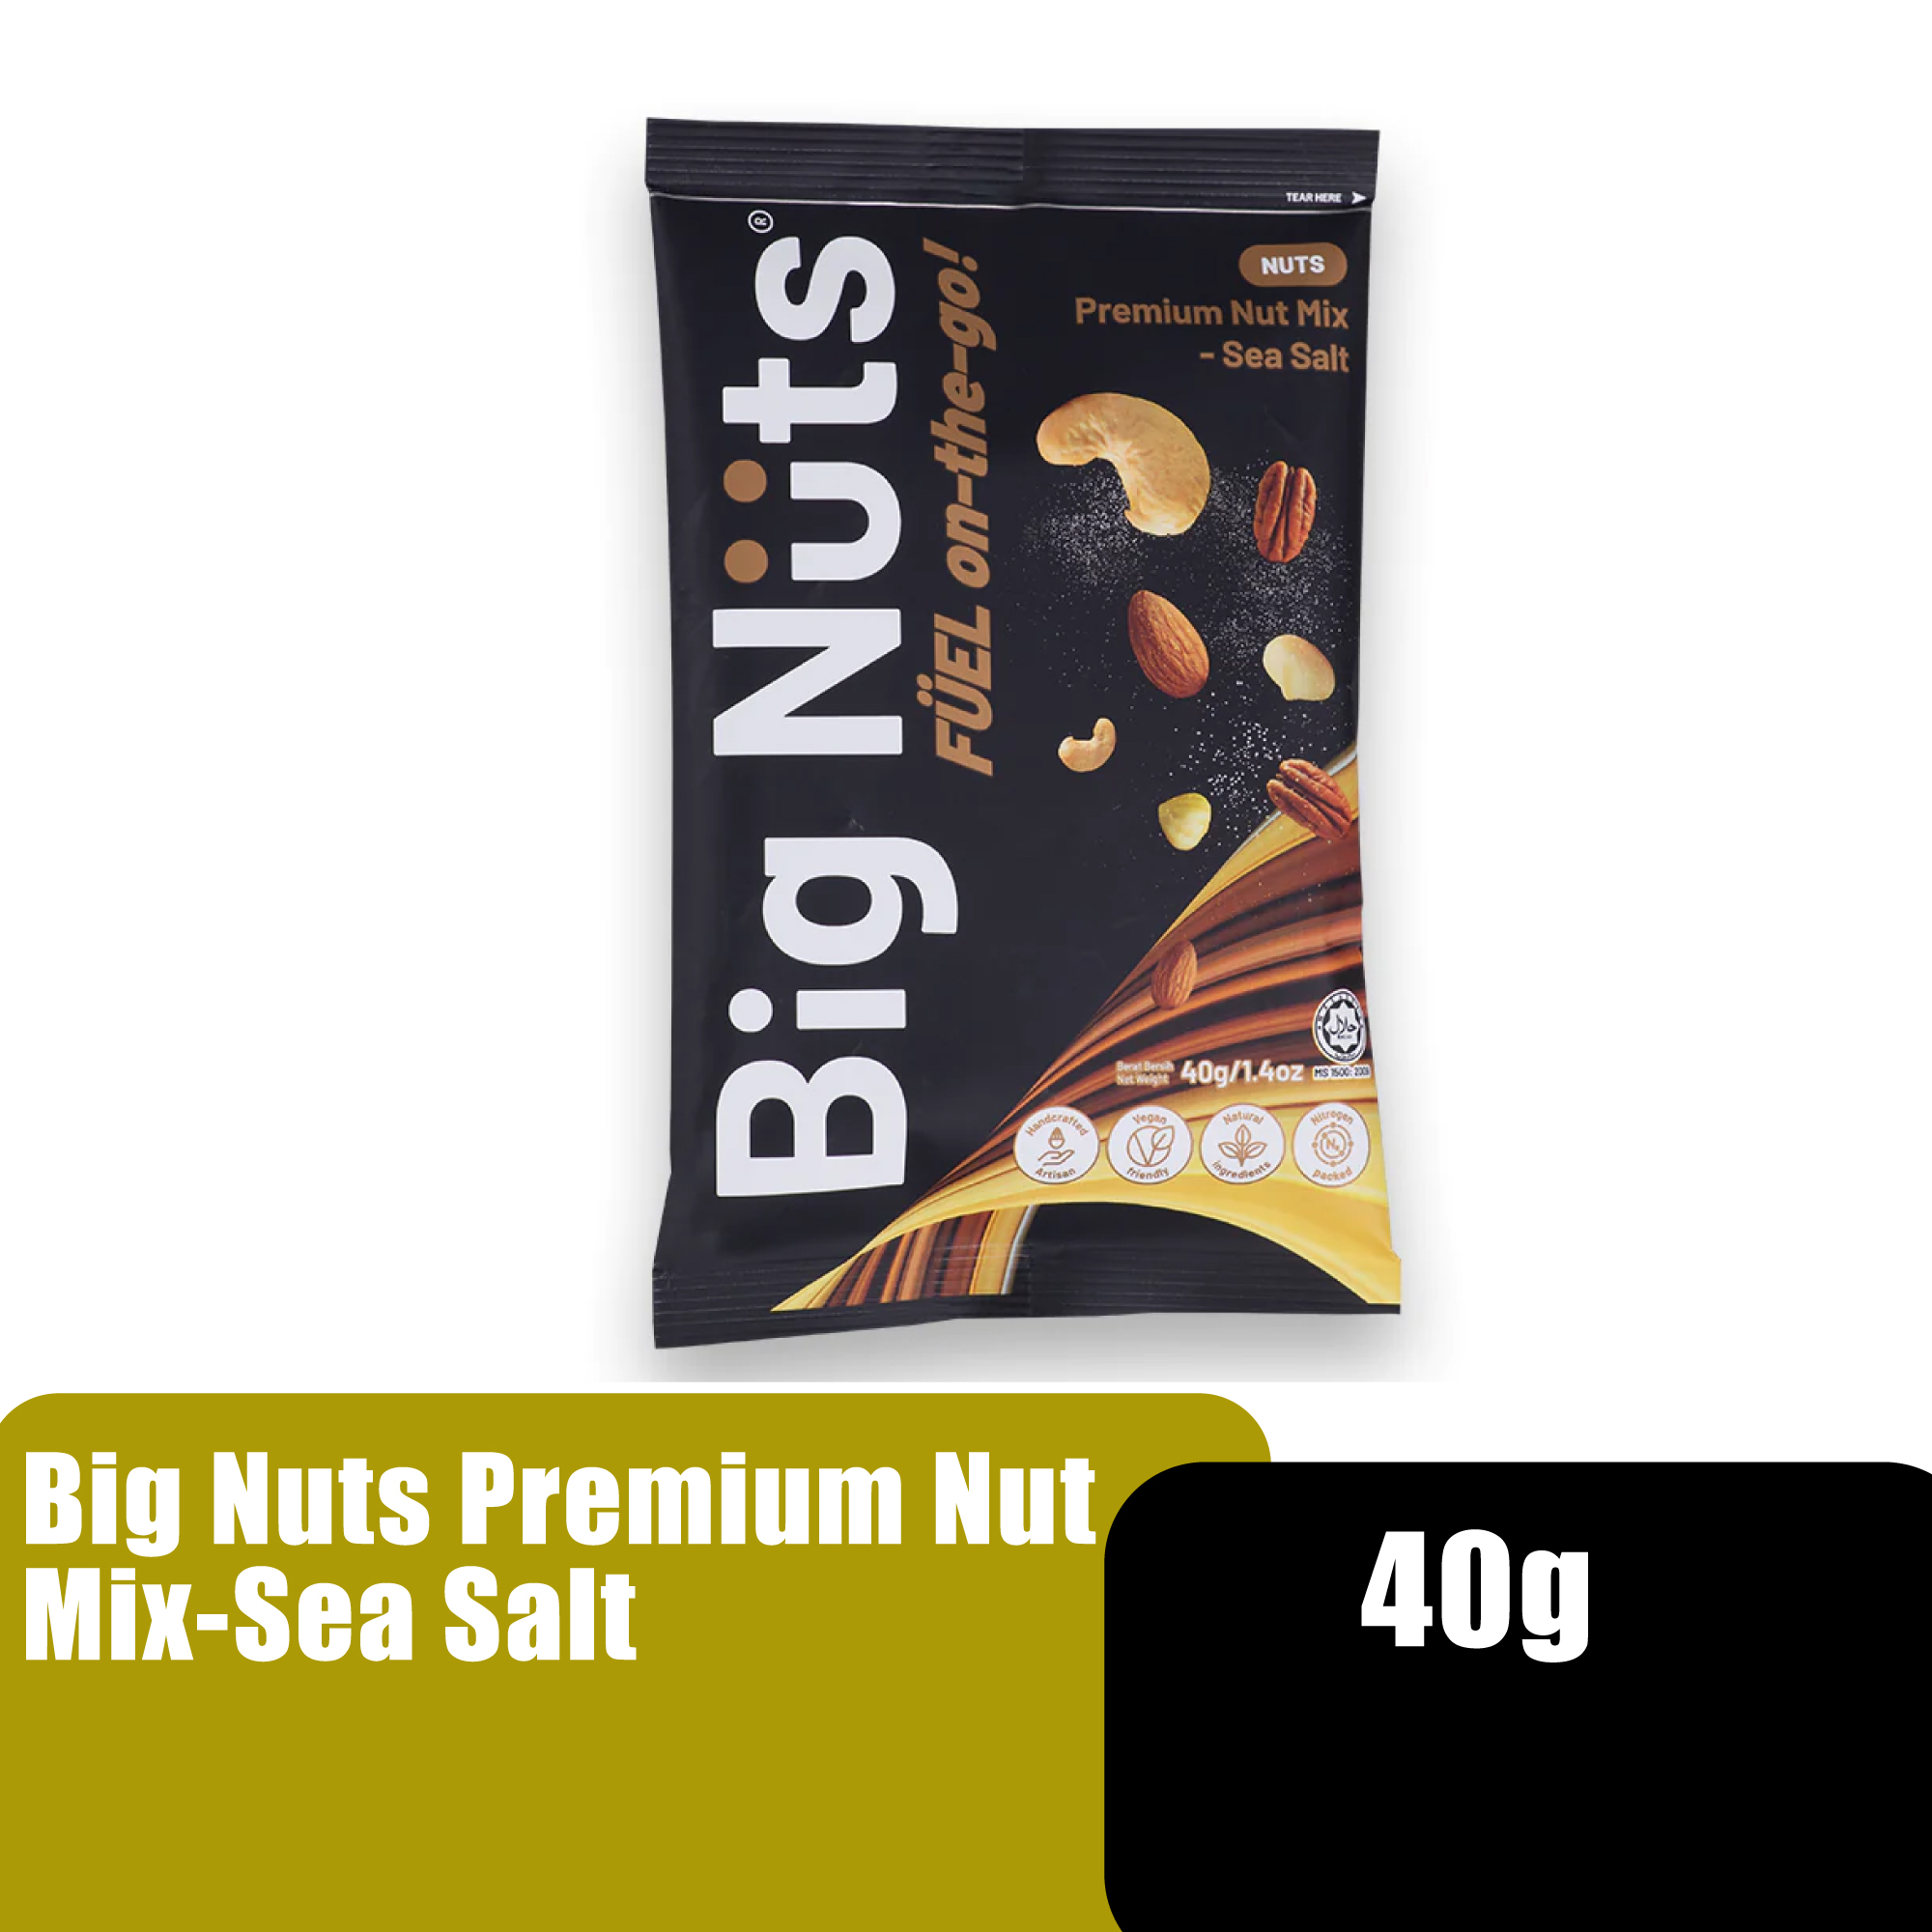 BIG NUTS PREMIUM NUT MIX - SEA SALT 40G